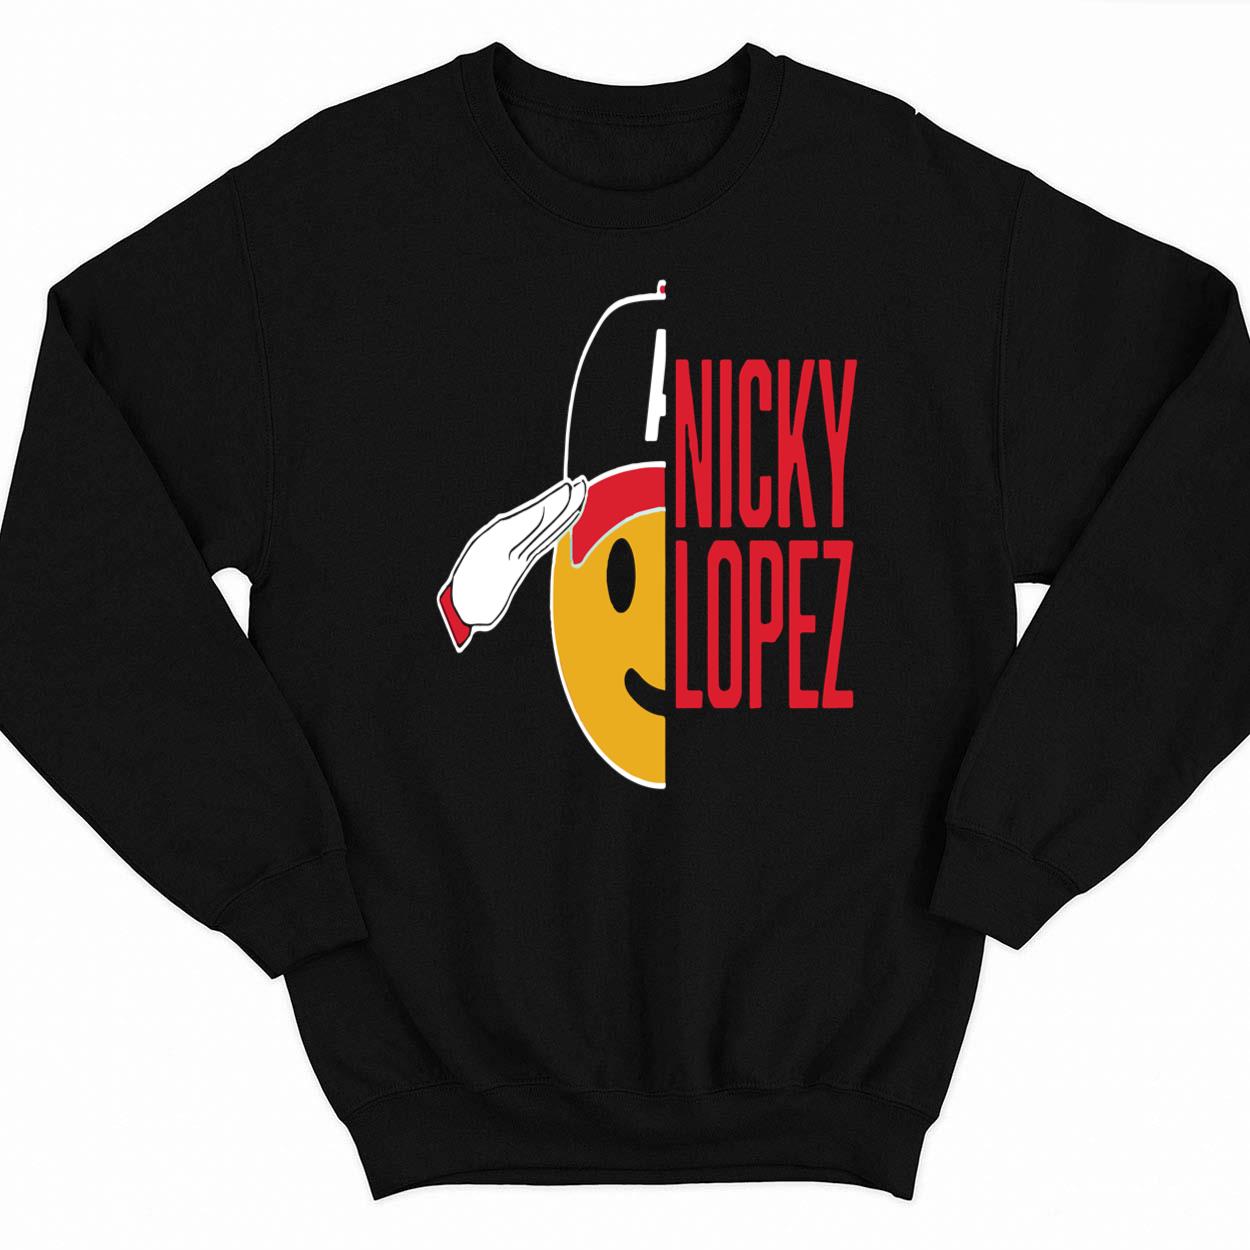 Endastore Lopez Salute Nicky Lopez Shirt